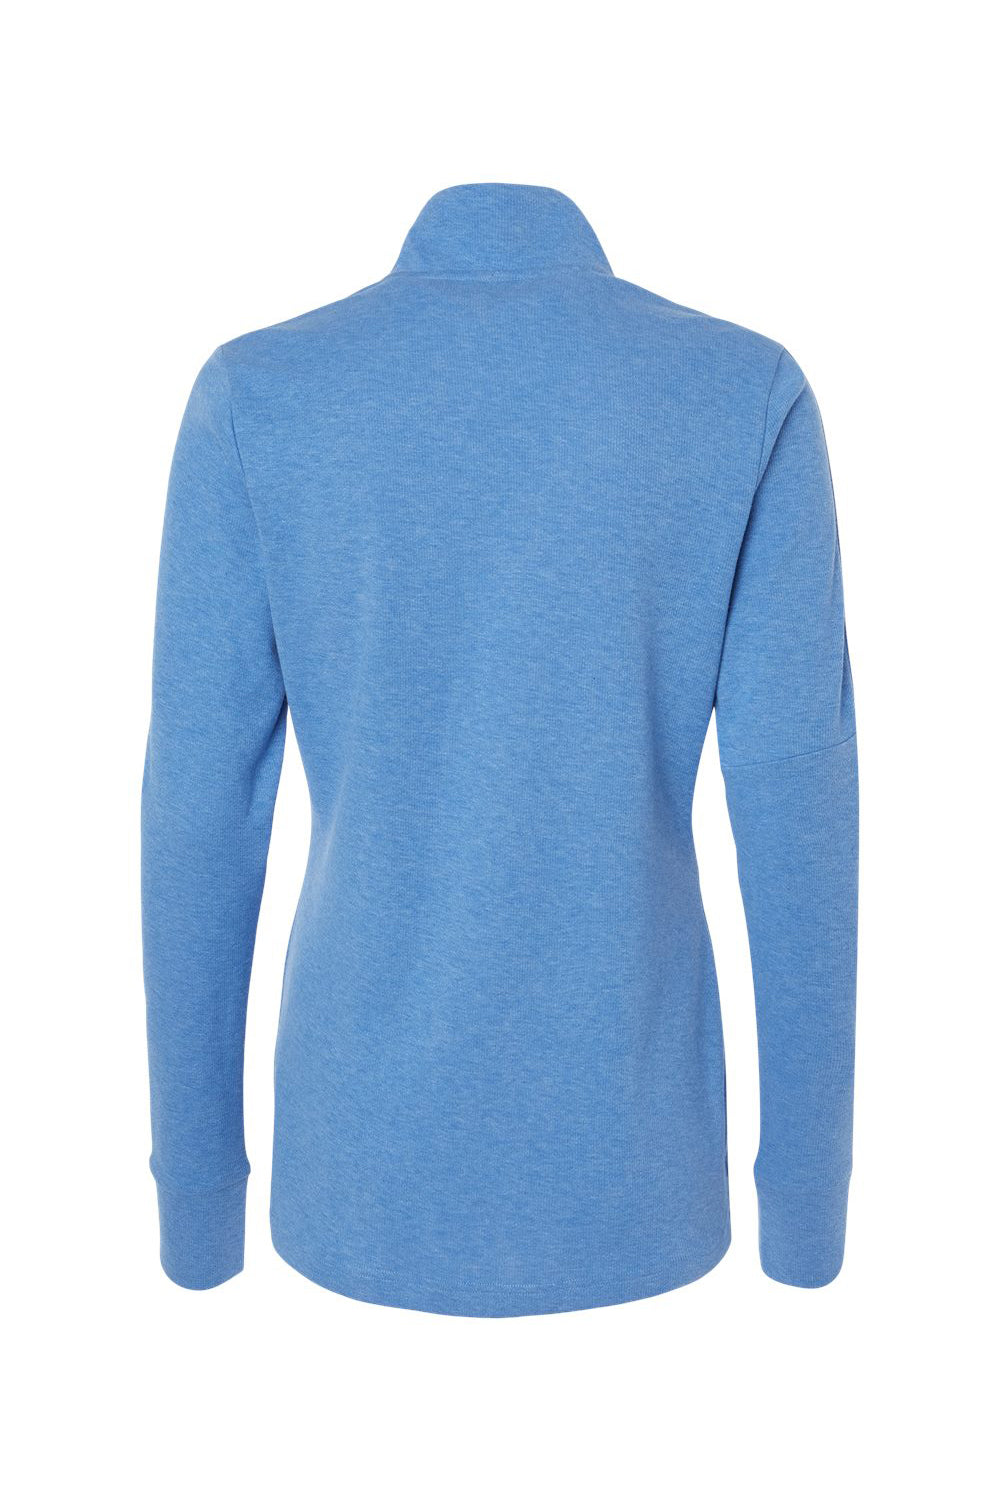 Adidas A555 Womens 3 Stripes Moisture Wicking 1/4 Zip Sweater Focus Blue Melange Flat Back